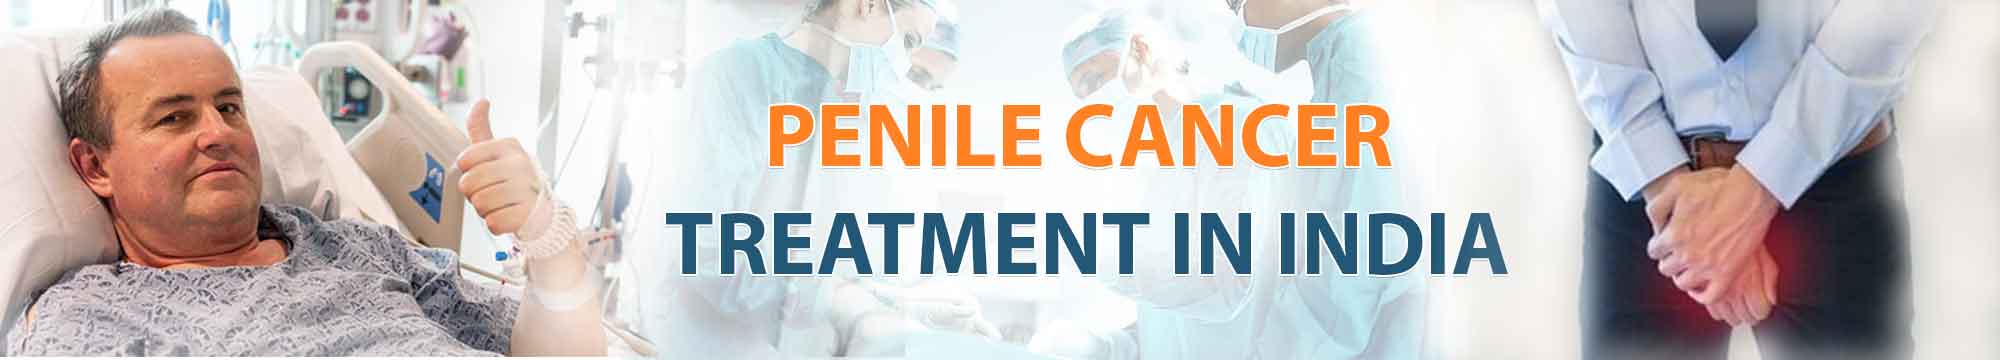 Penile Cancer Surgery India